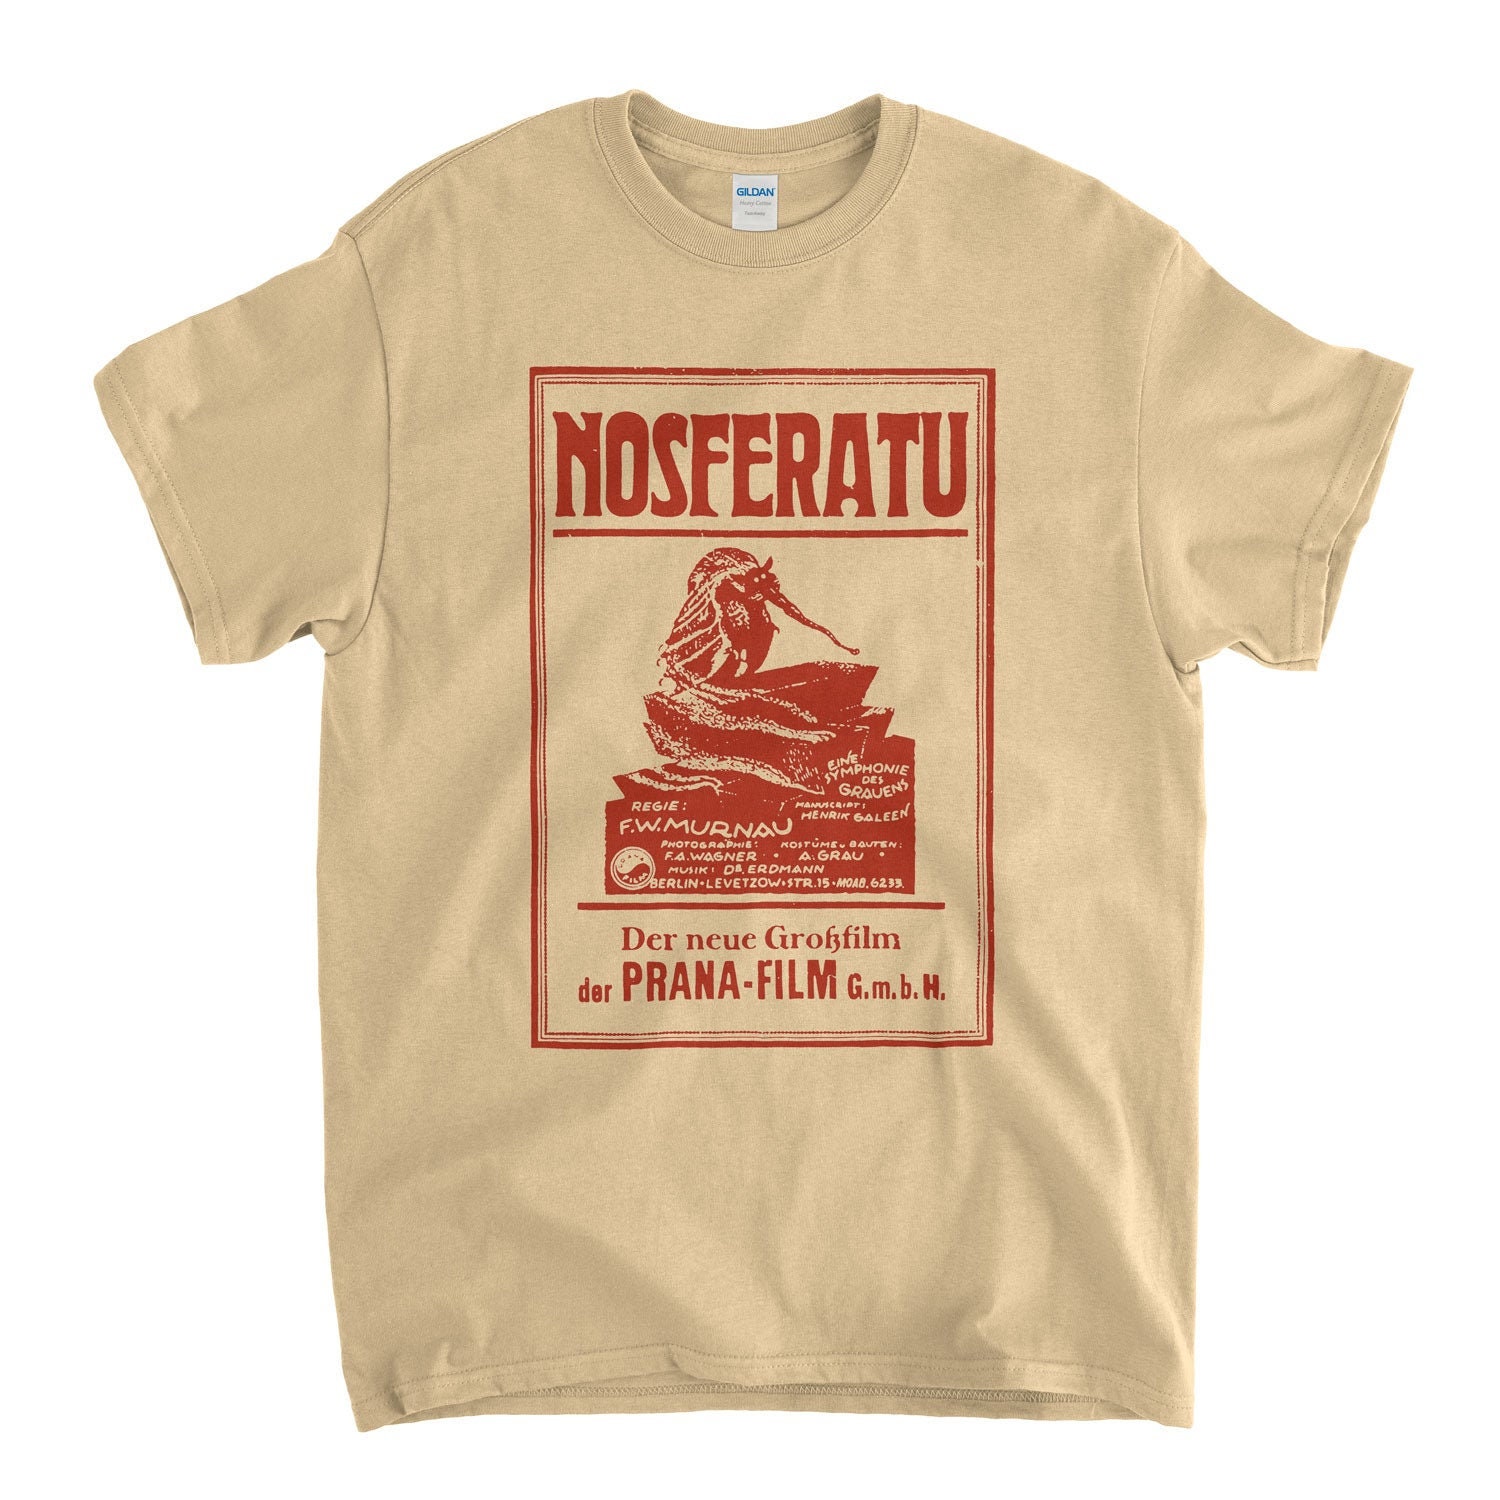 Nosferatu T Shirt - Classic Vintage Expressionist Movie Poster T Shirt